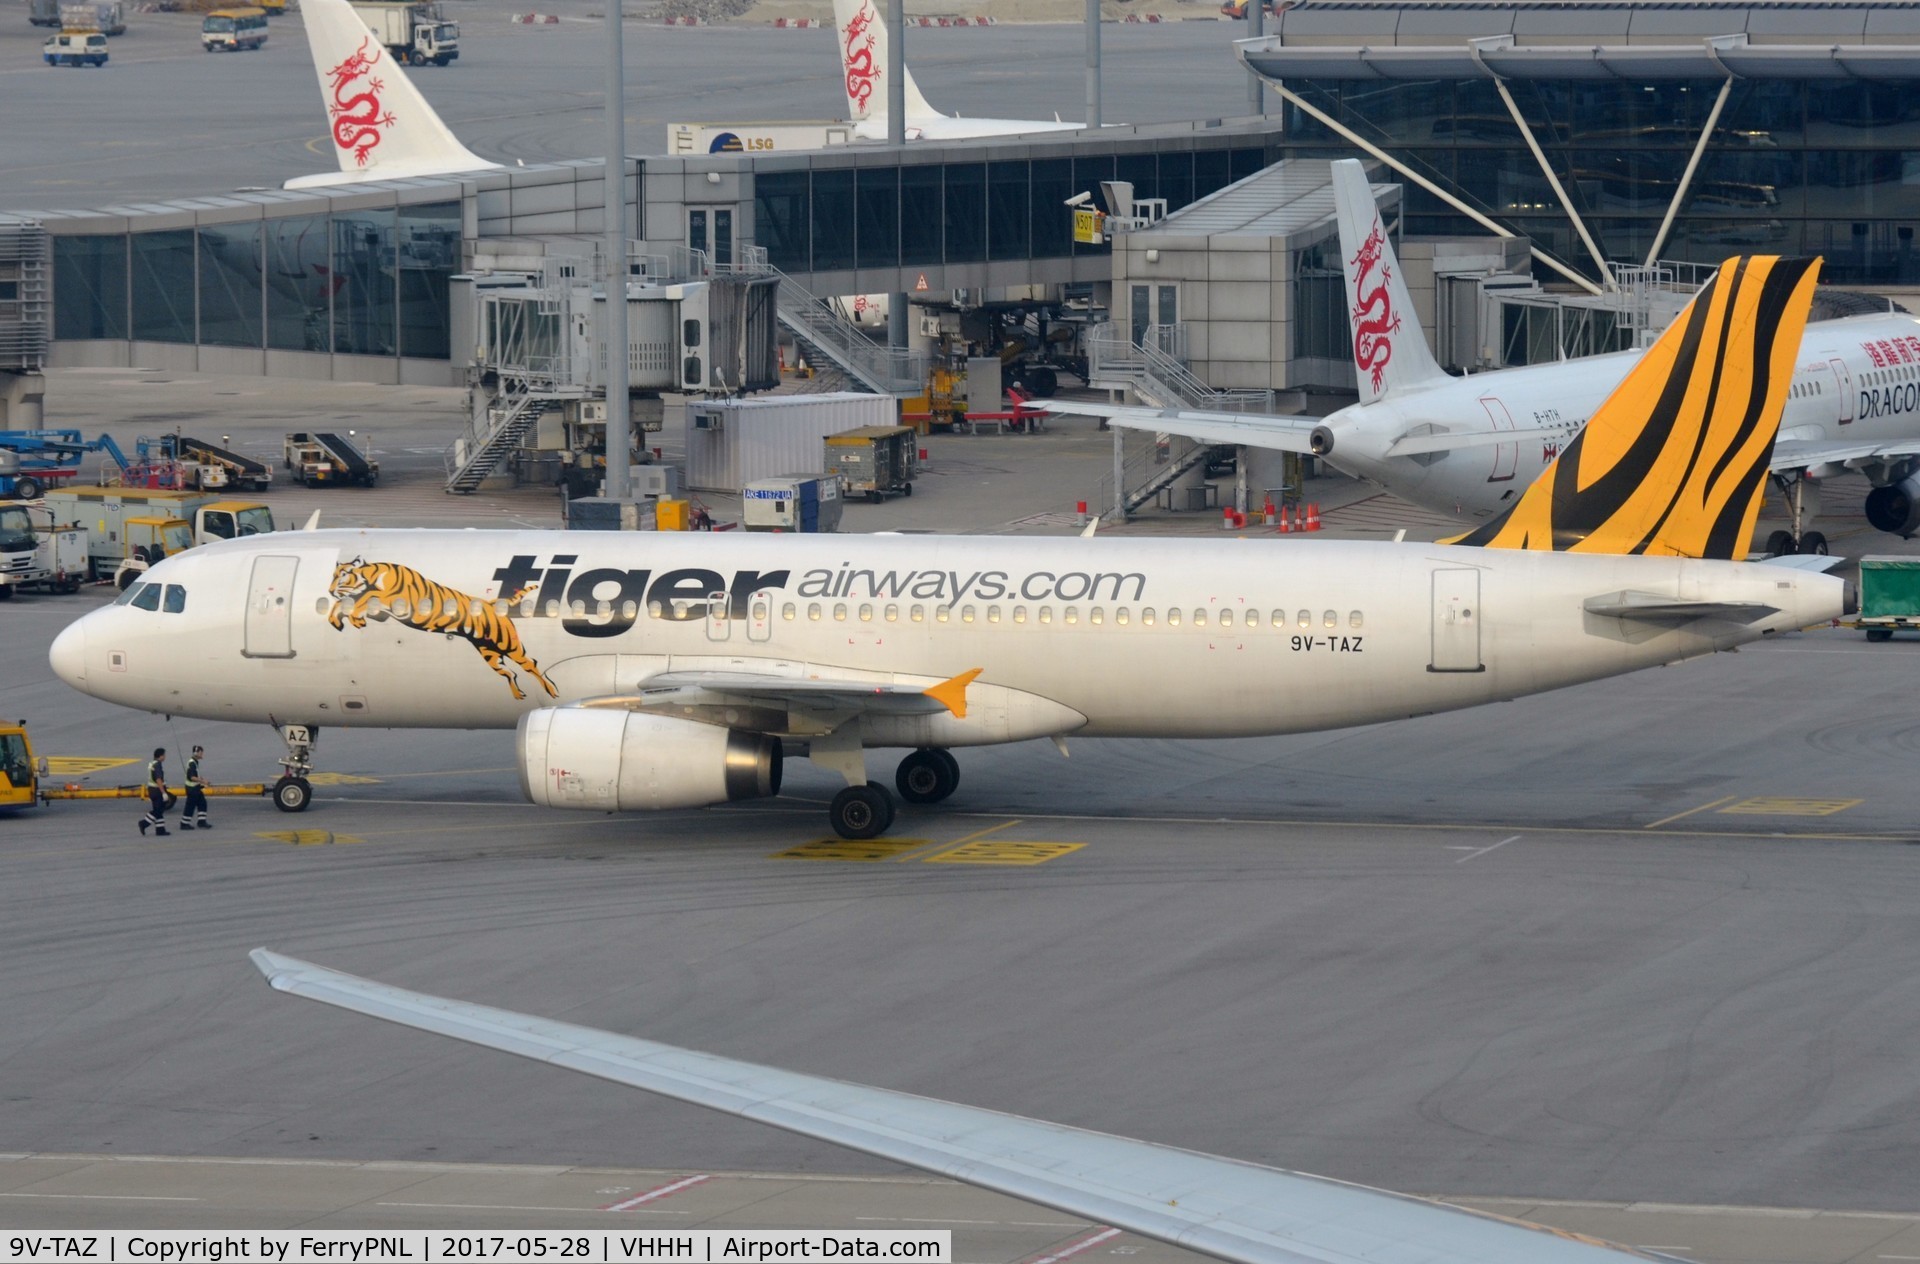 9V-TAZ, 2011 Airbus A320-232 C/N 4879, Tigerair A320 still in original Tiger Airways livery including the tiger.